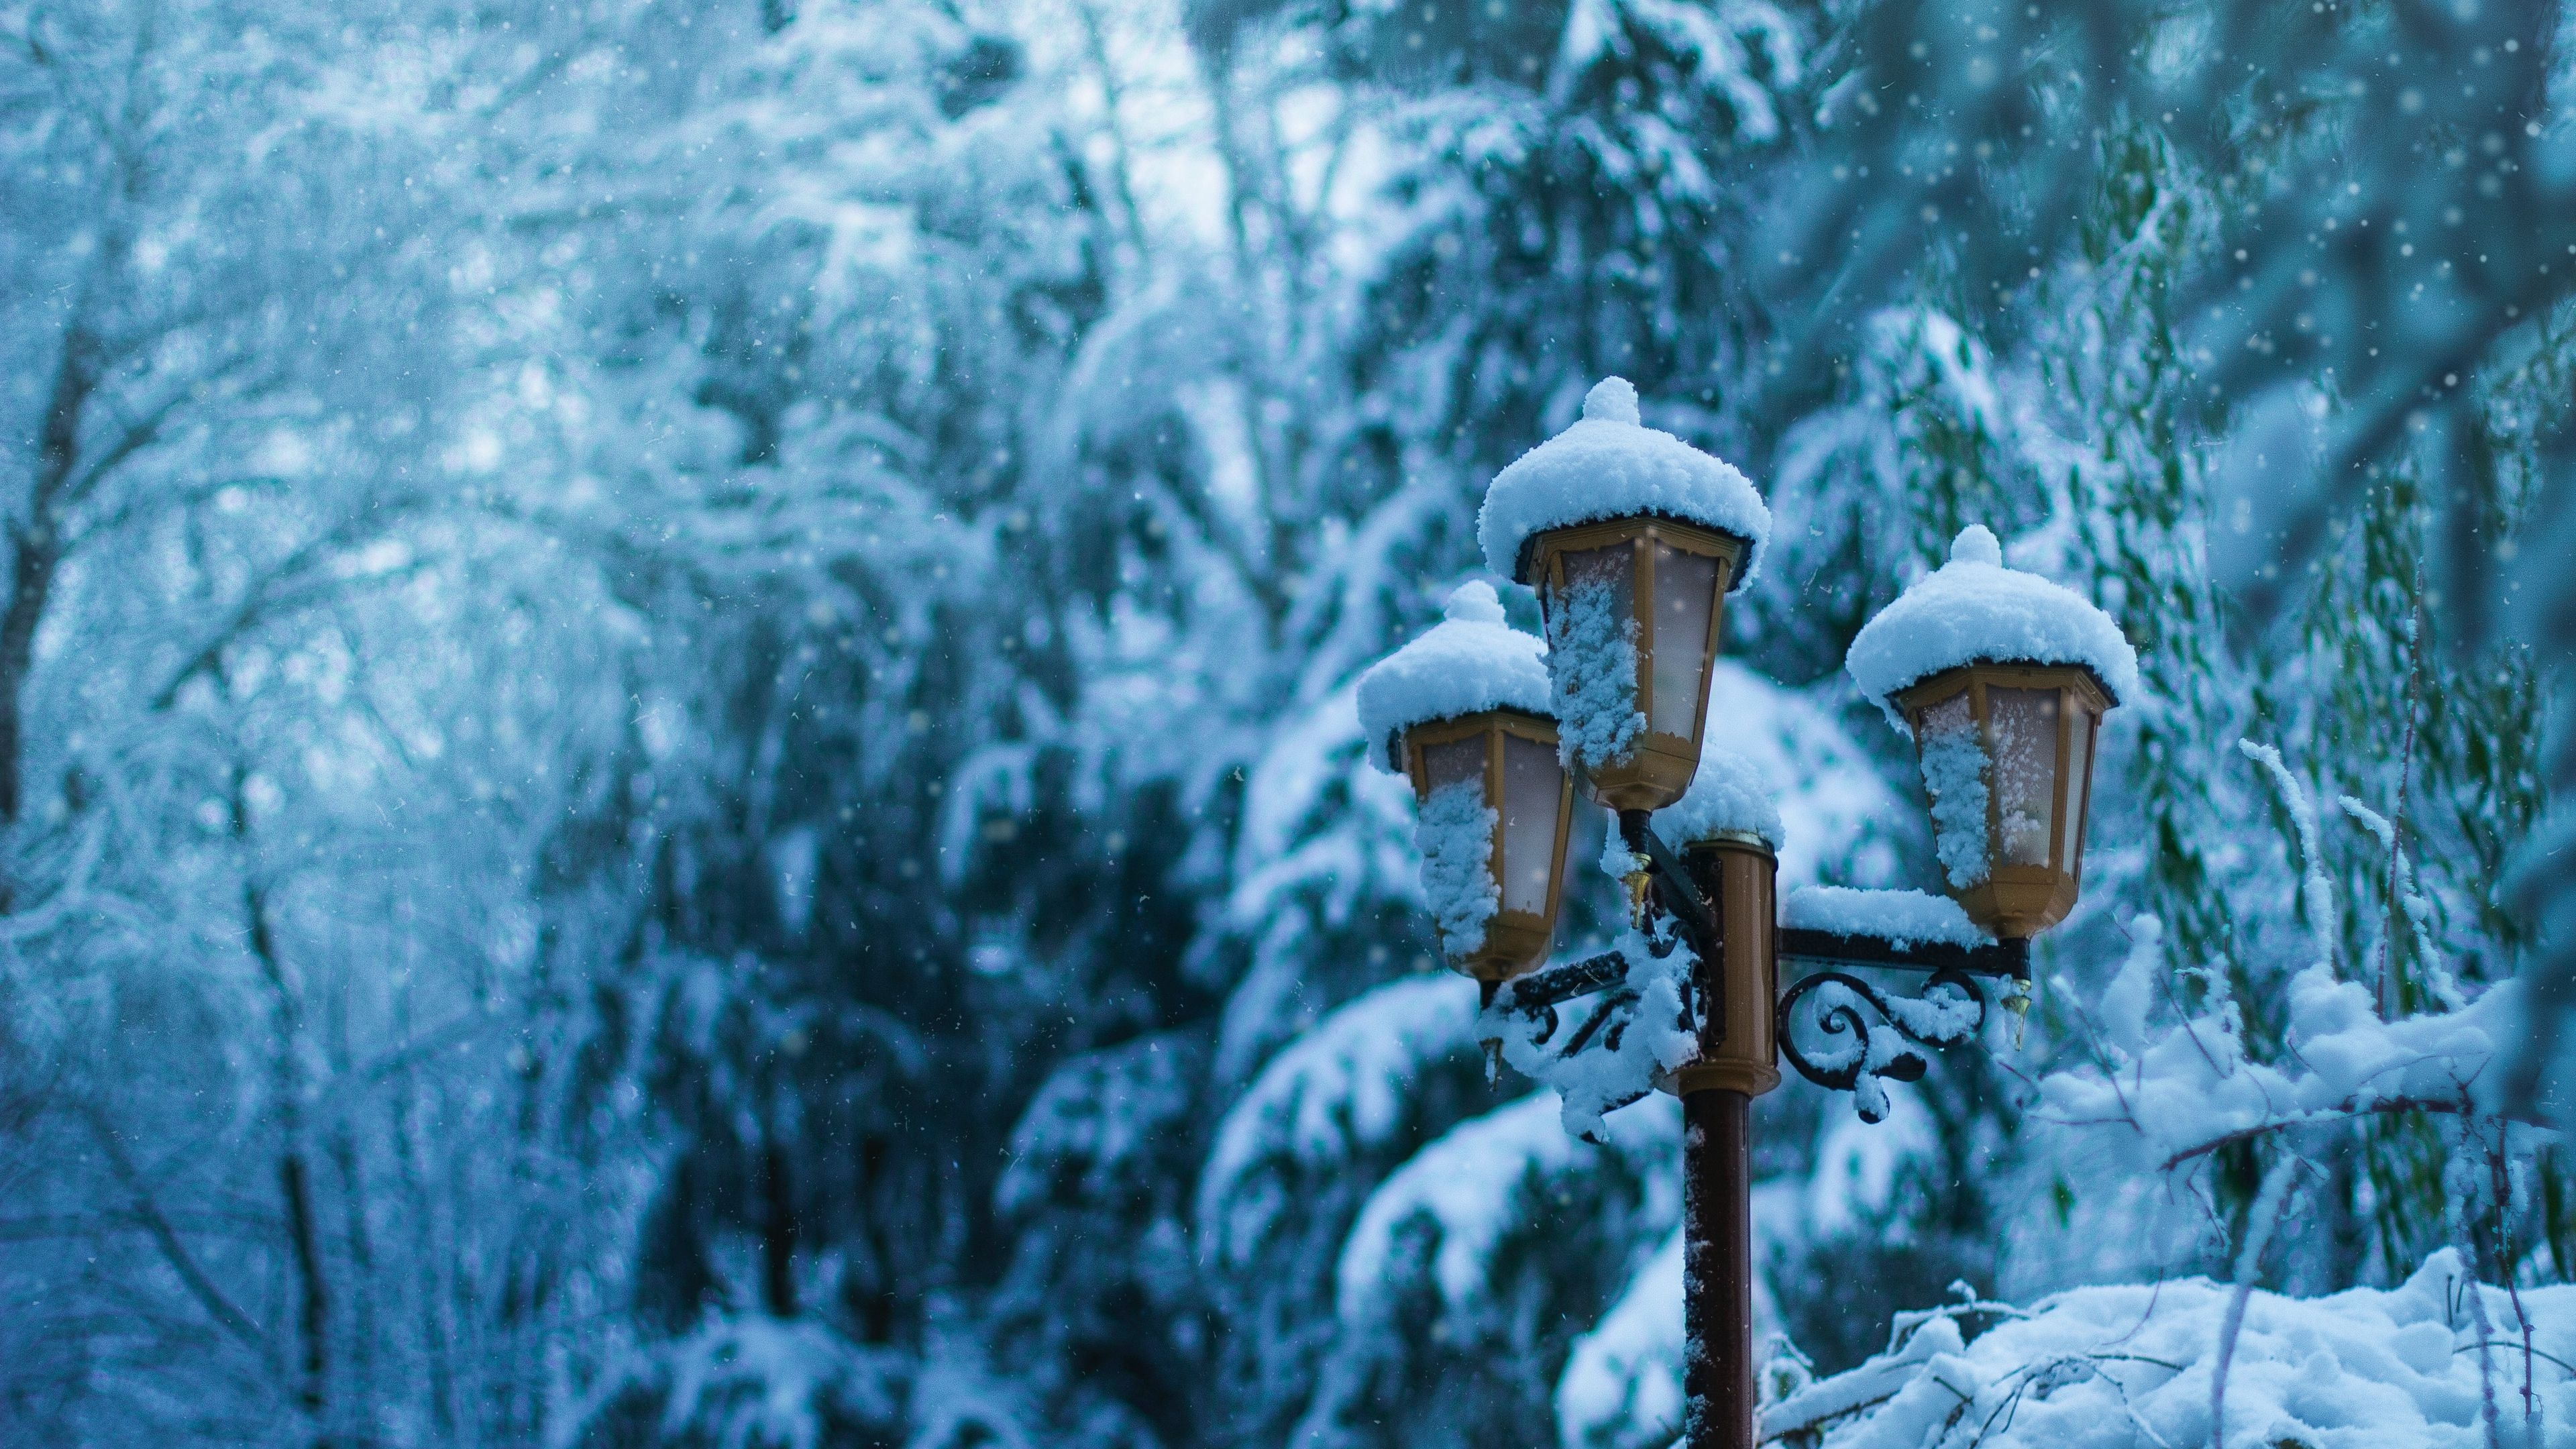 Snow, Winter scenery, Frozen wonderland, Serene nature, 3840x2160 4K Desktop